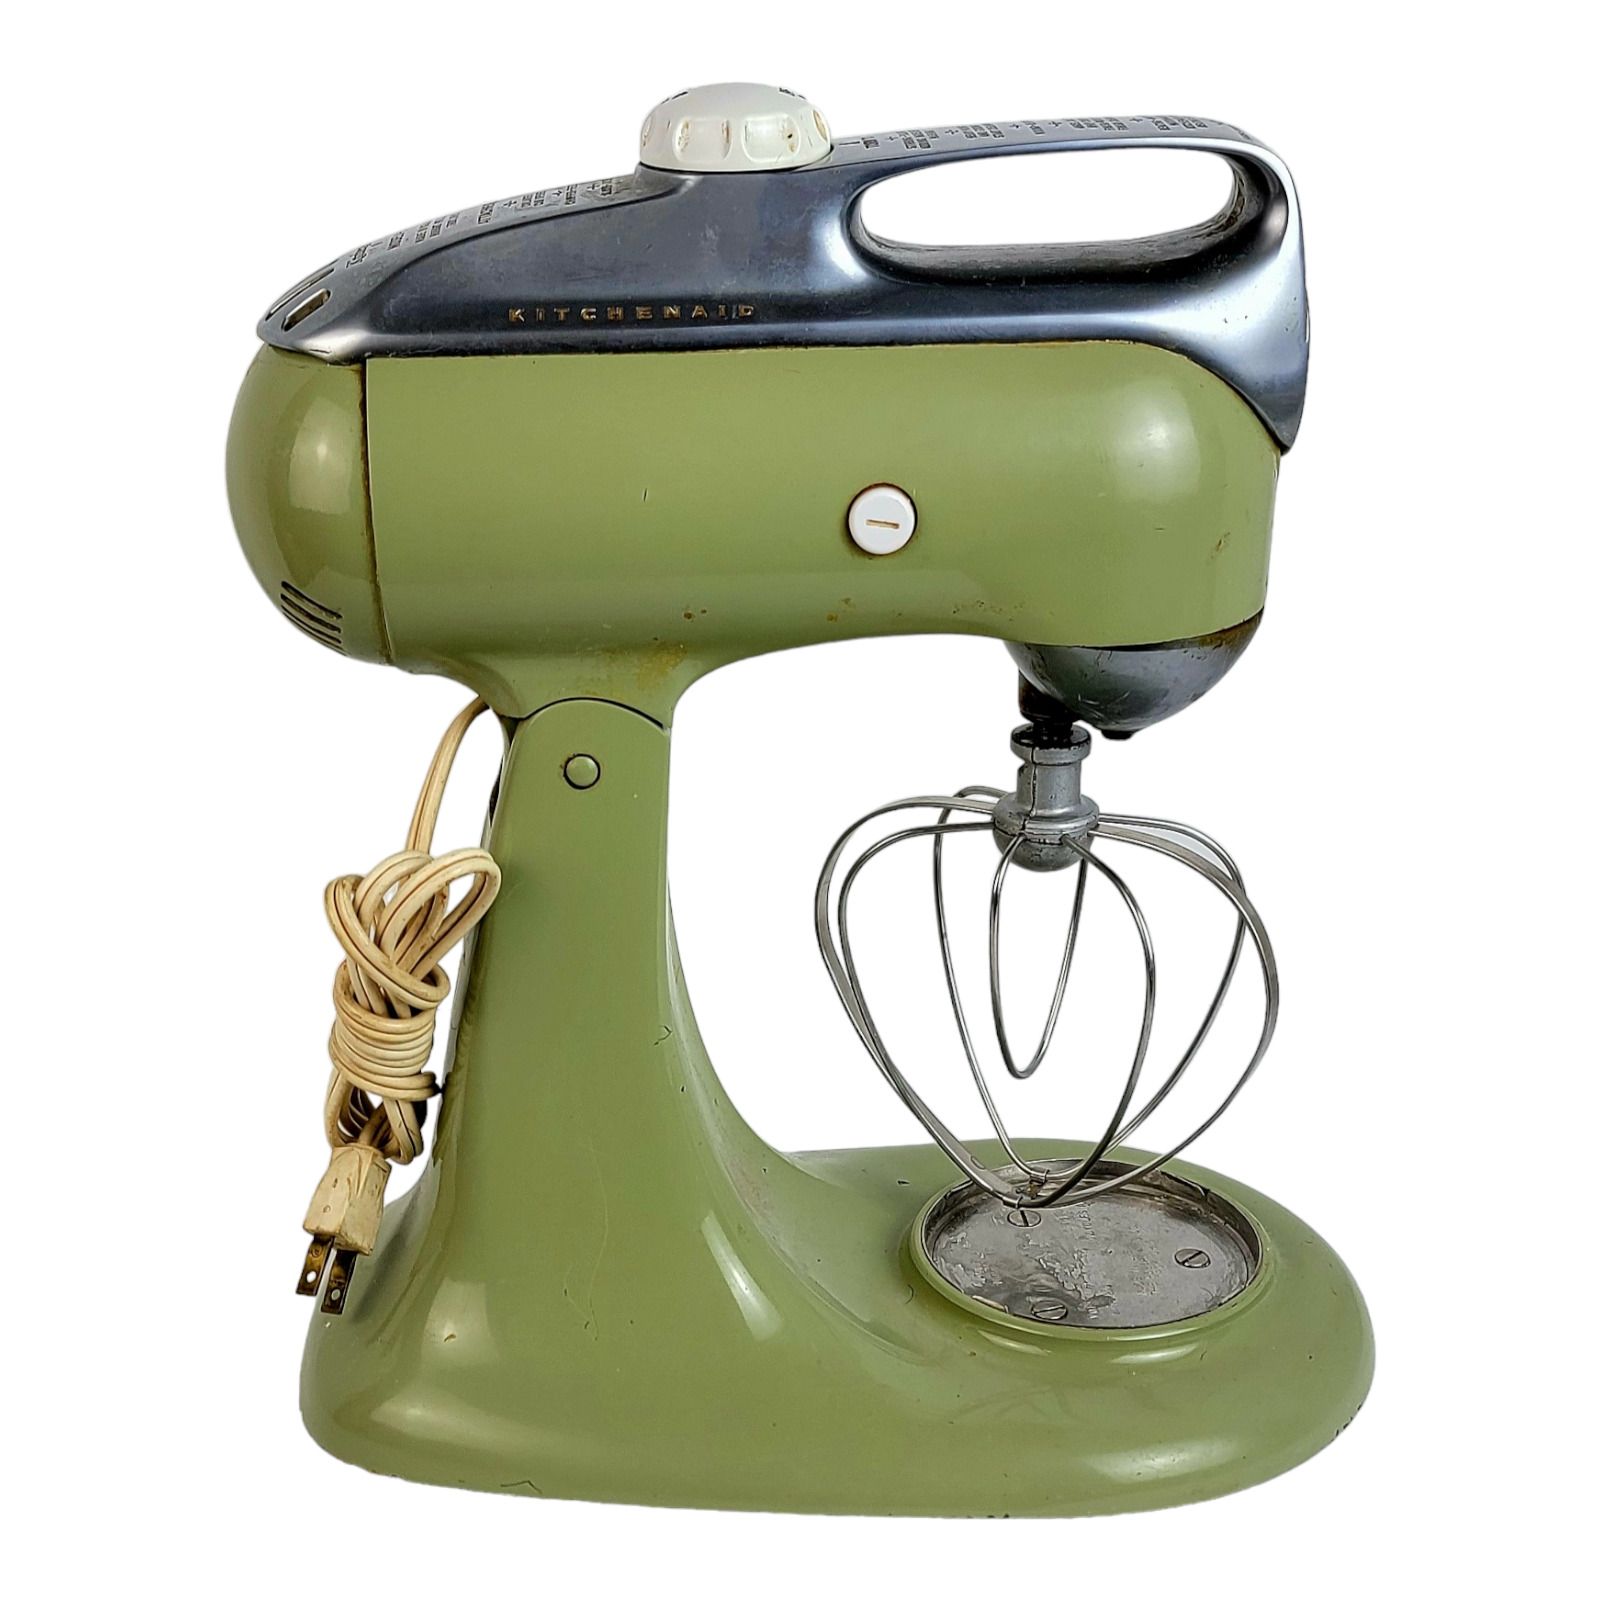 Vintage KitchenAid 10 Speed Mixer Model 4C - Missing Bowl - Works See Video